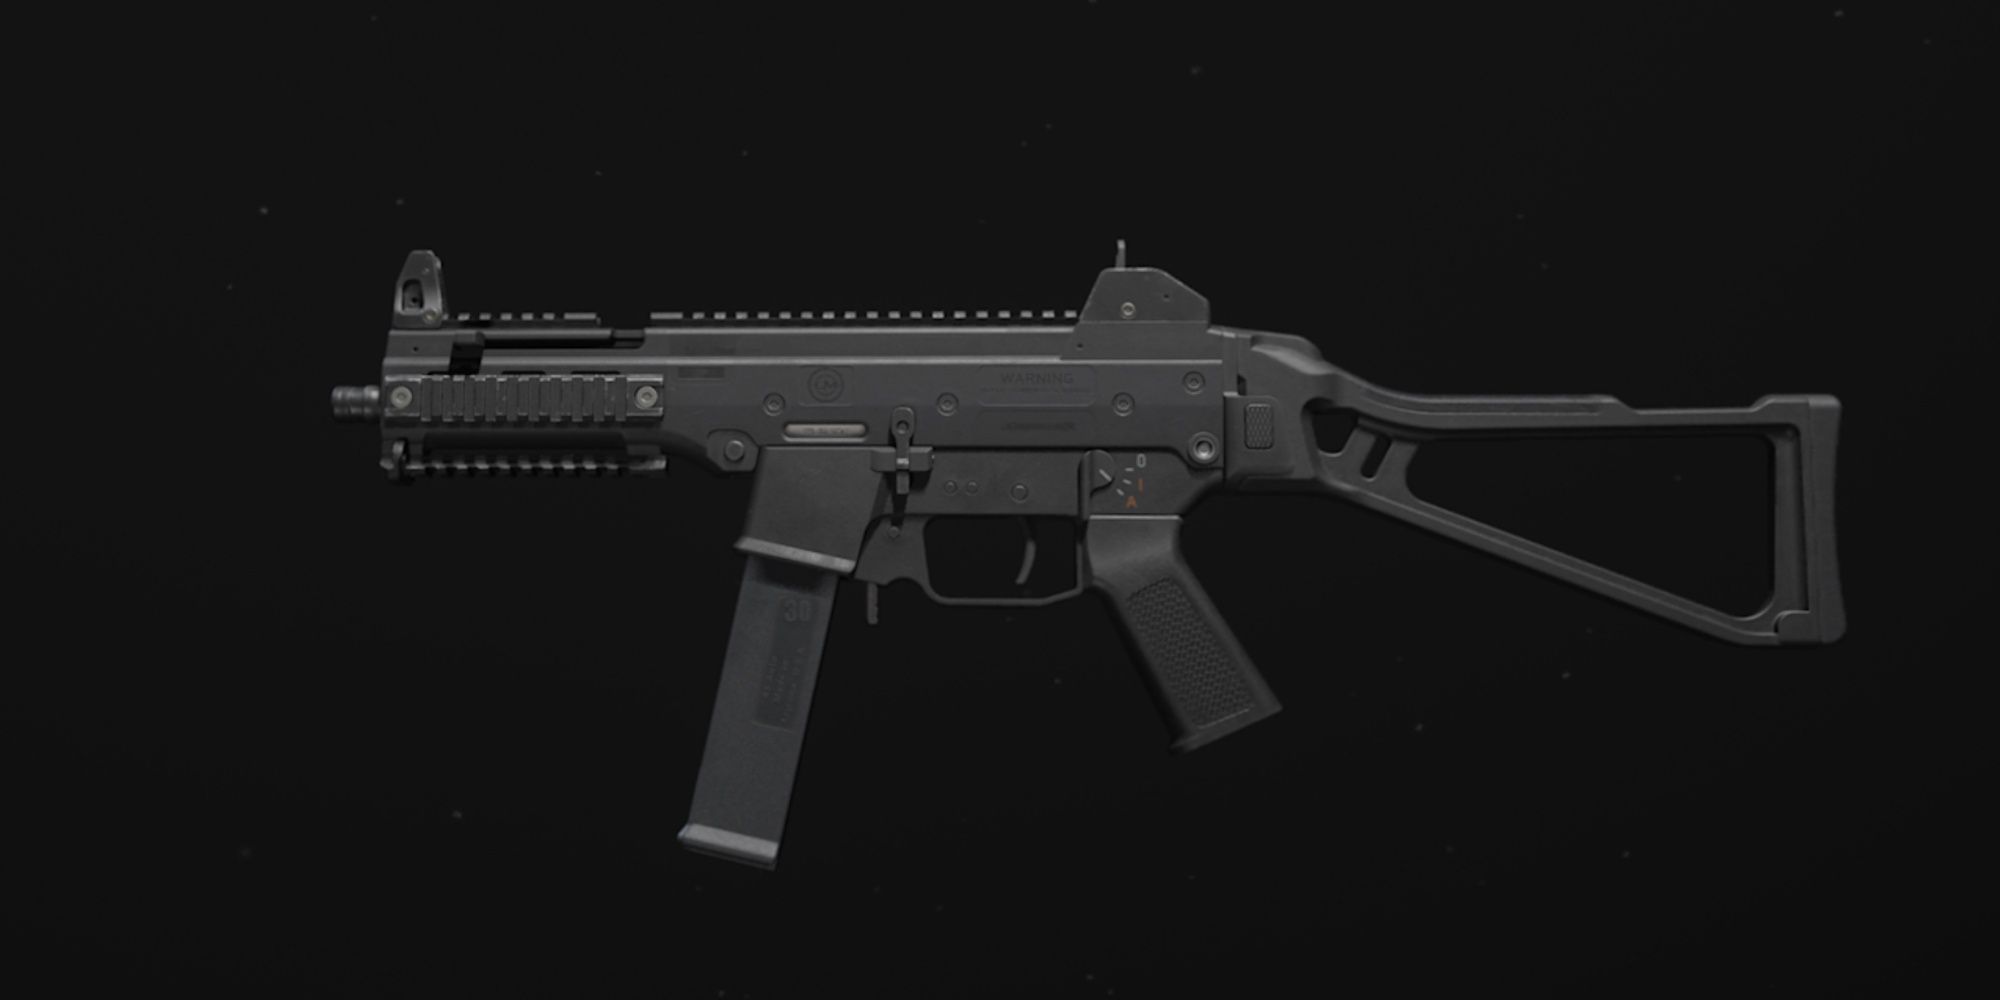 The Call of Duty Modern Warfare 3 Striker on the black gunsmith background.